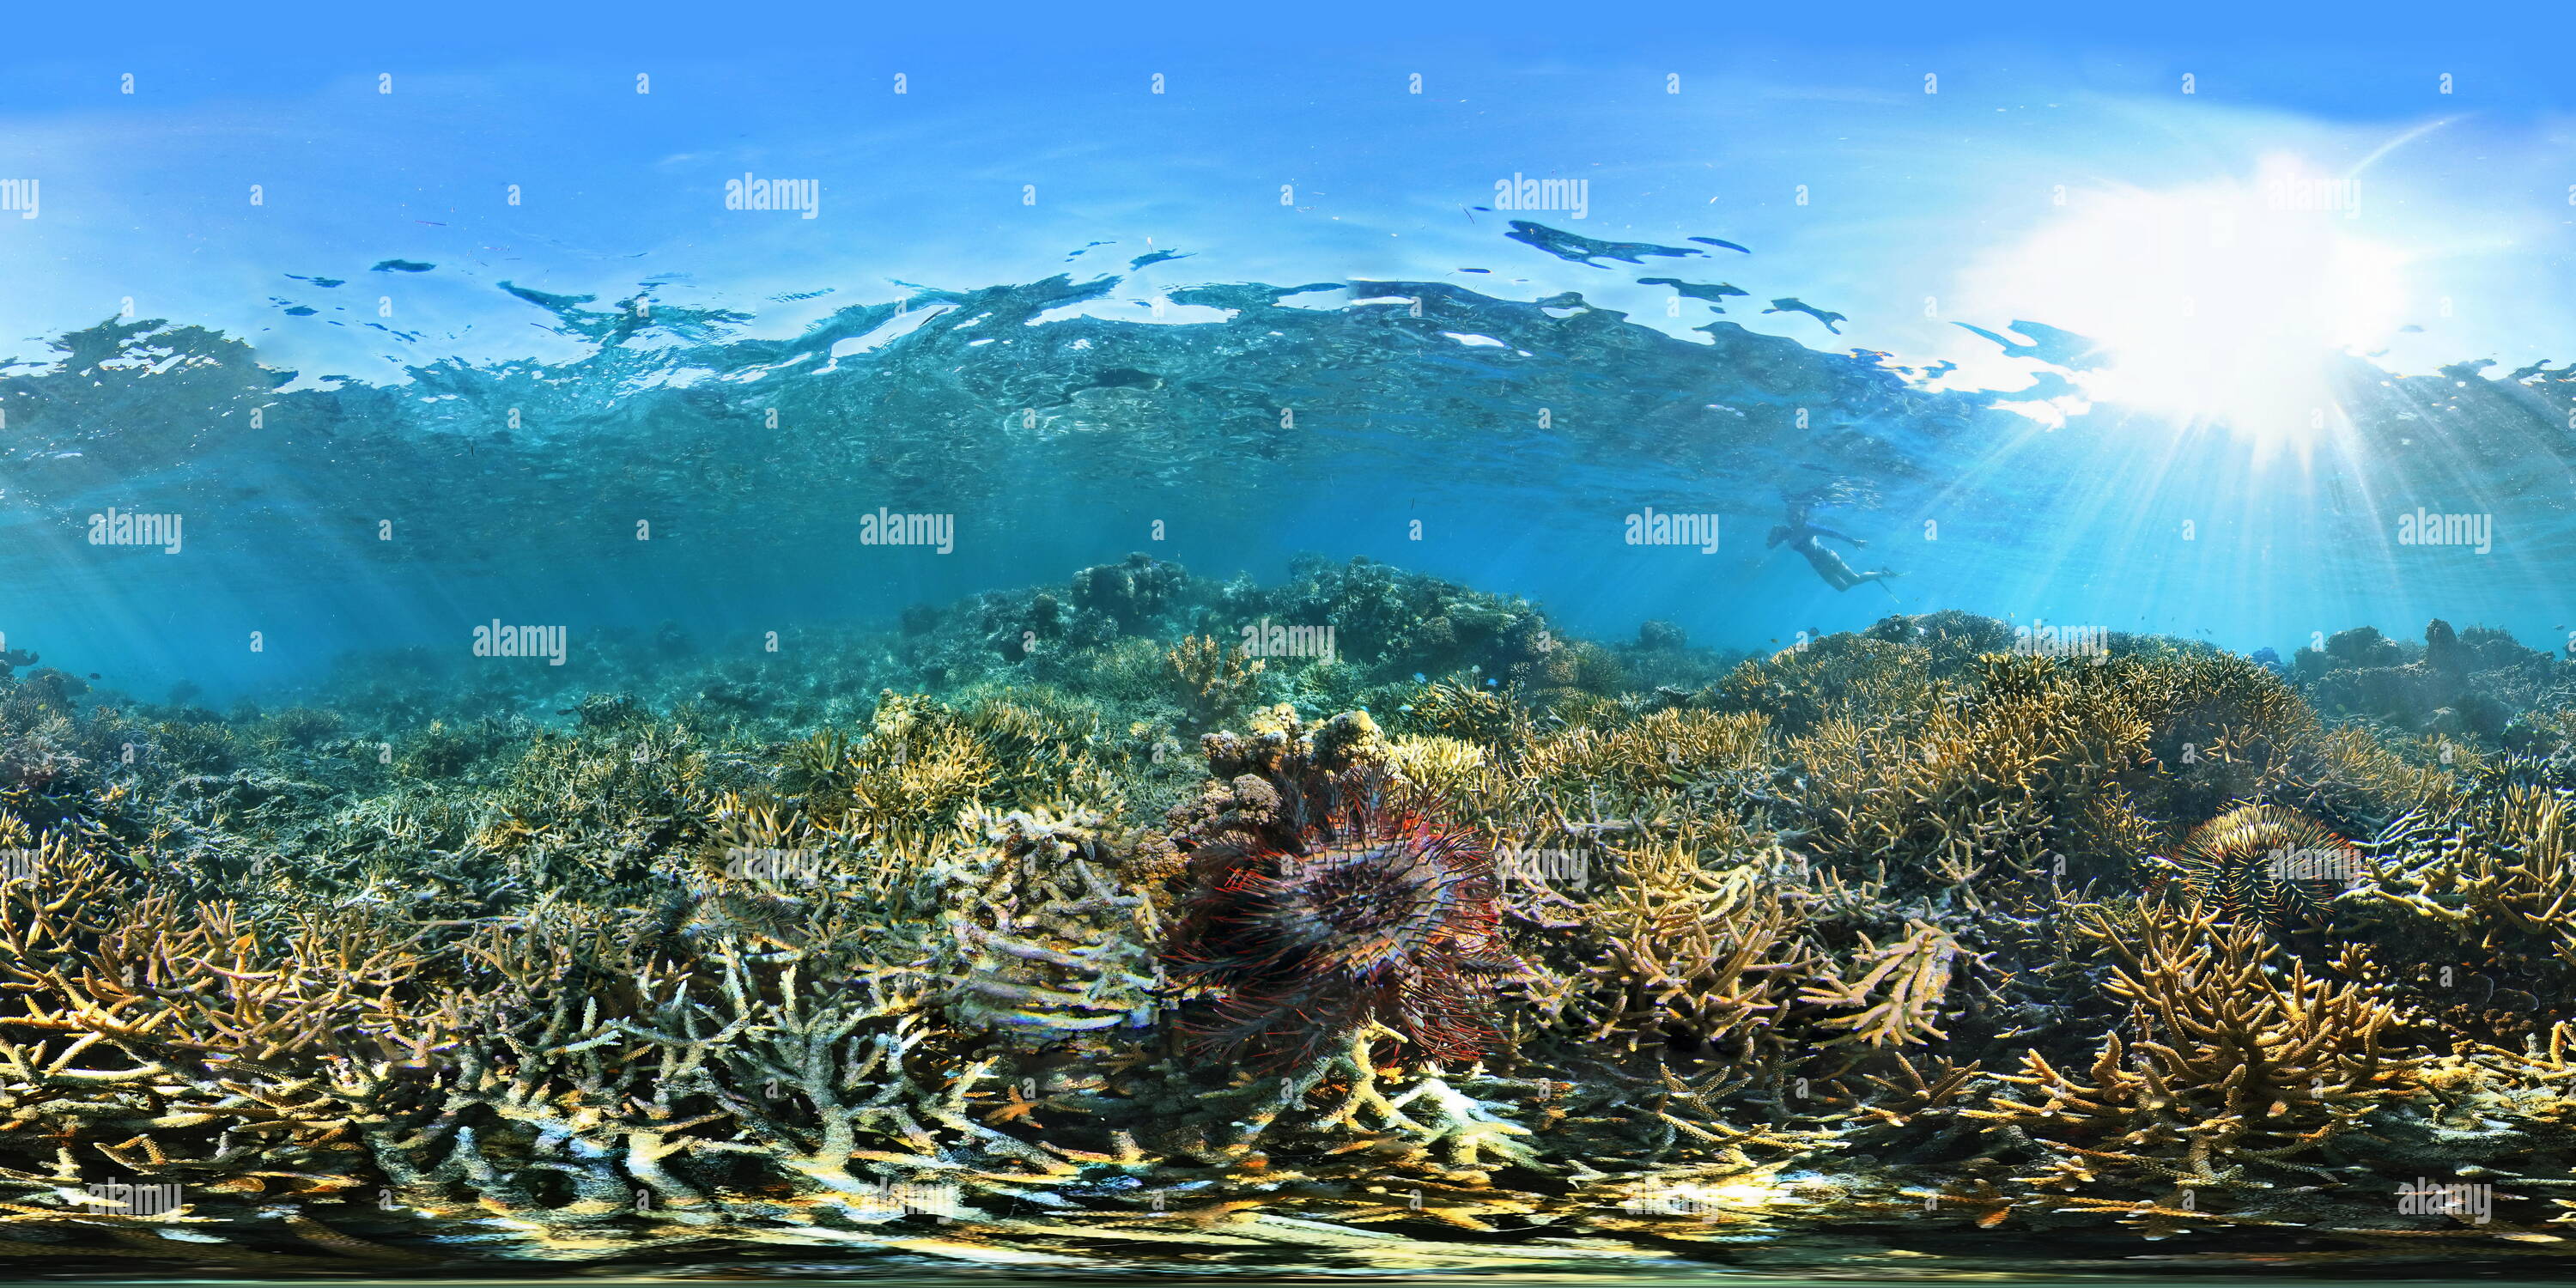 360 degree panoramic view of Crown of Thorns starfish Acanthaster planci New Calledonia